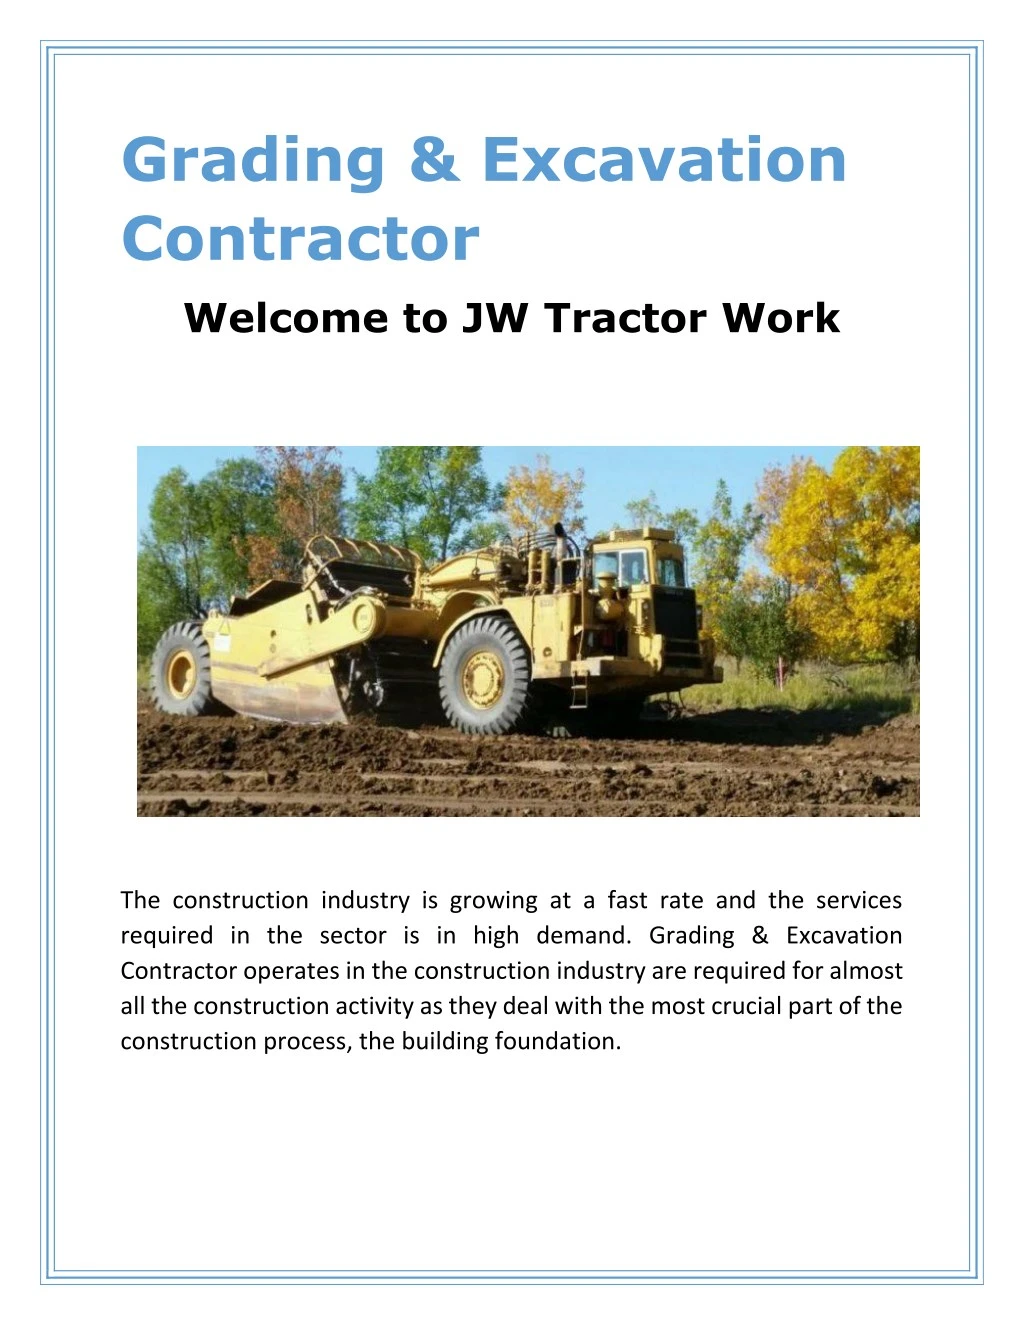 grading excavation contractor welcome